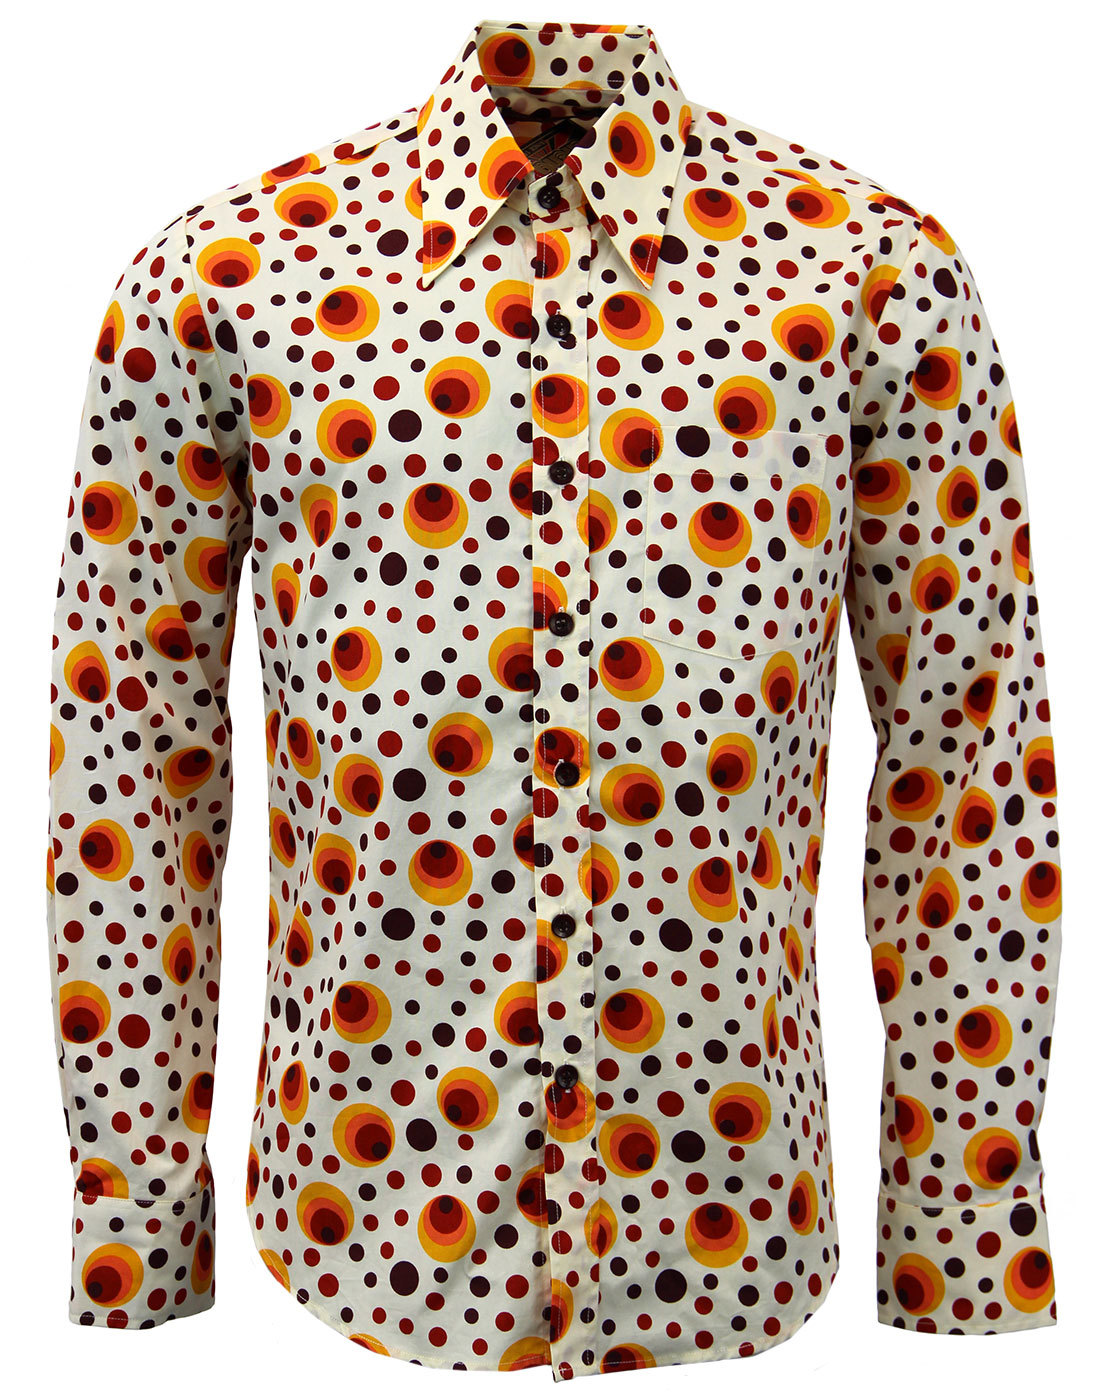 CHENASKI Dot Shirt | Retro Seventies Mod Op Art Psychedelic Mens Shirt